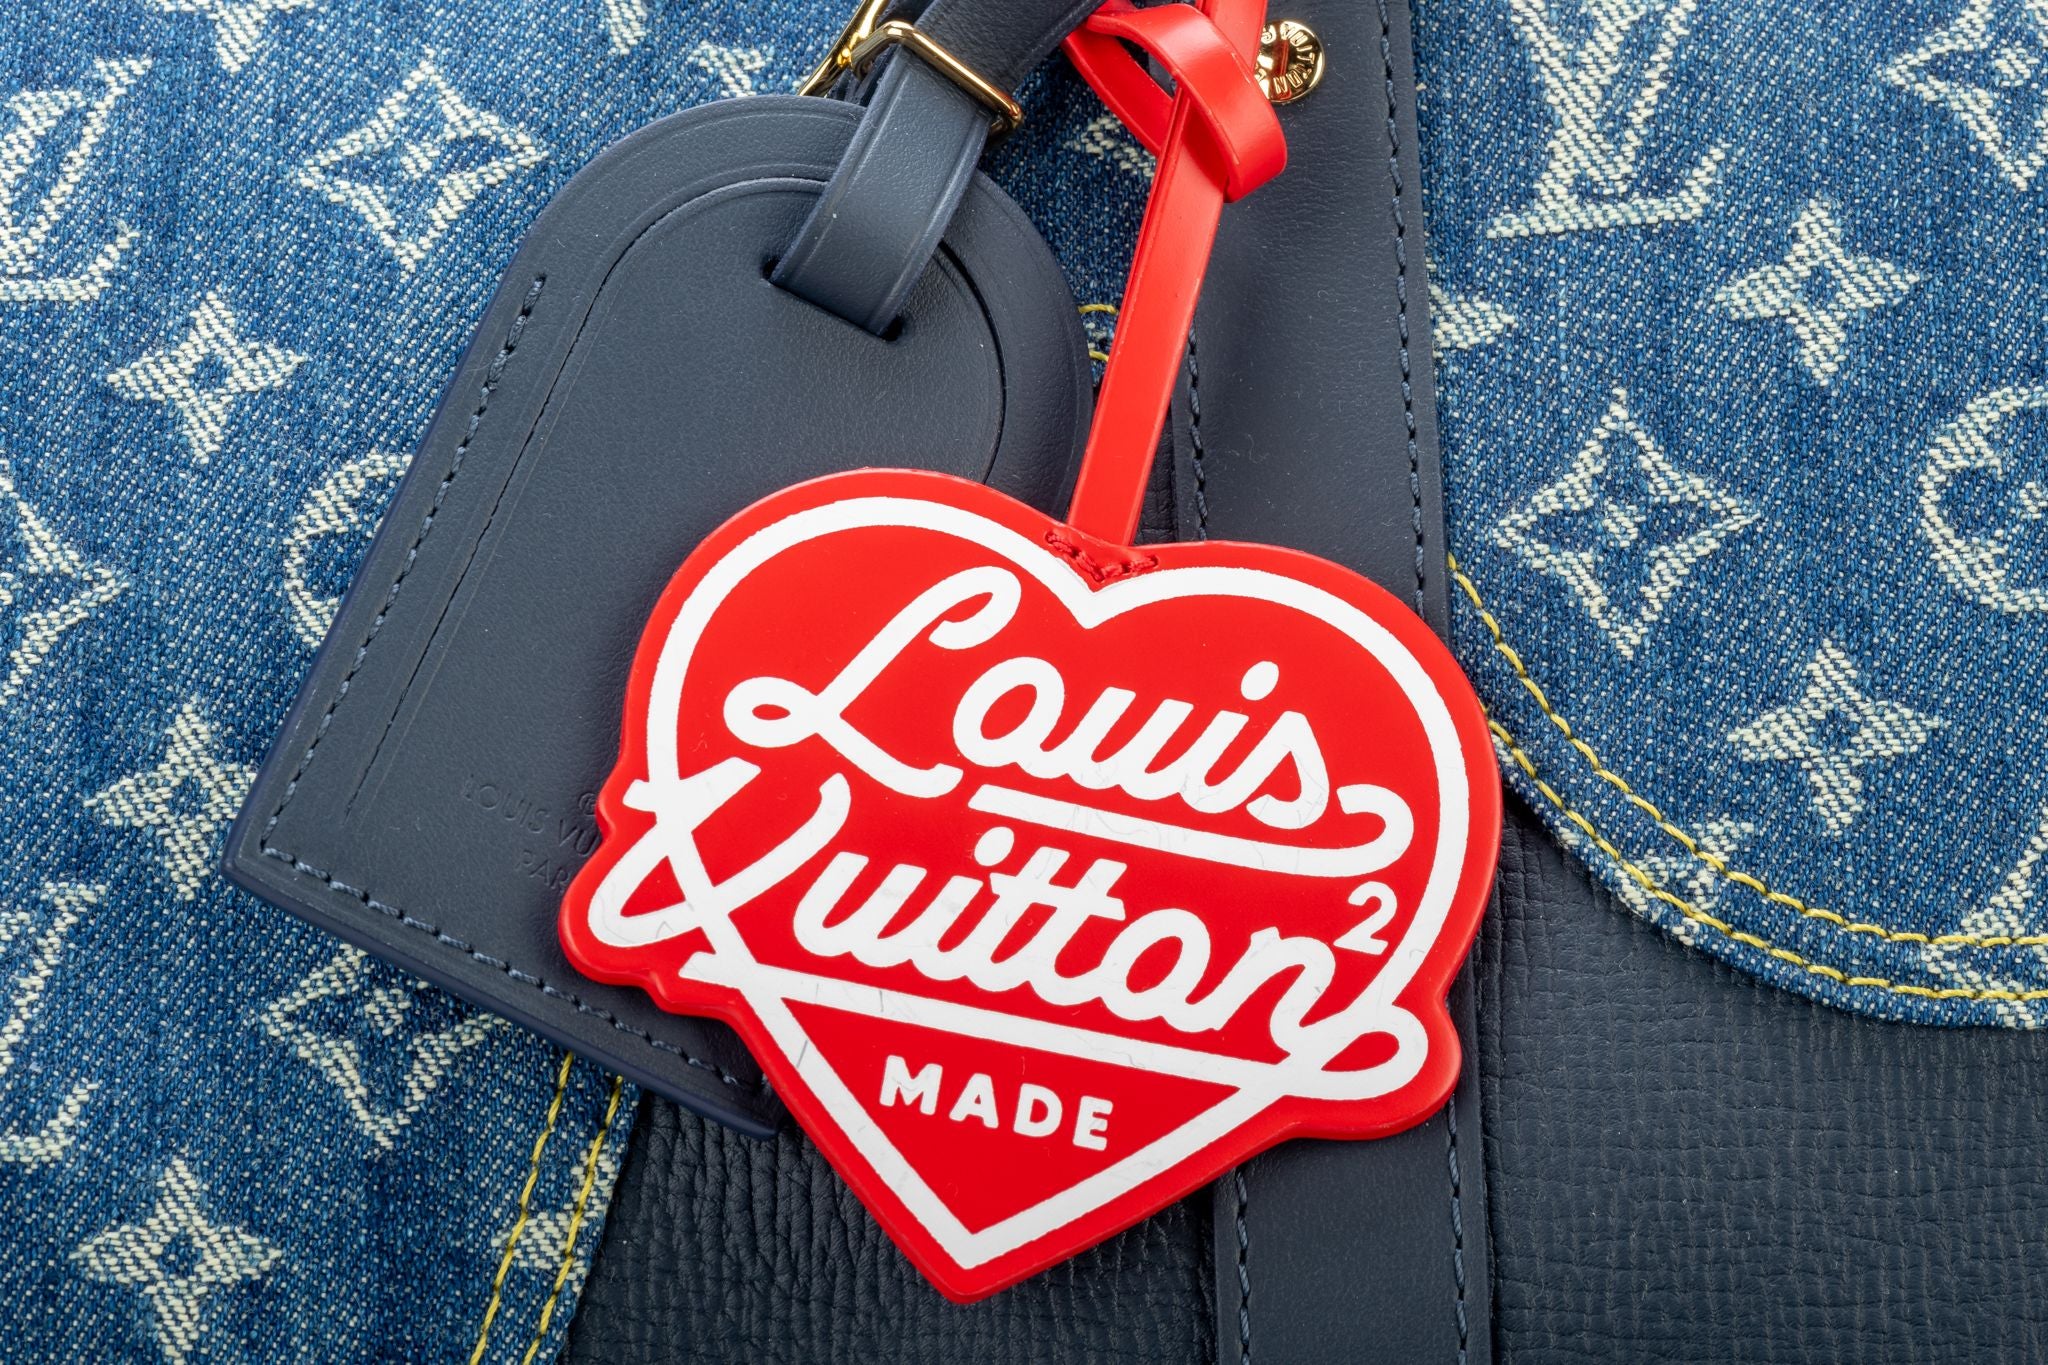 Louis Vuitton Nigo Keepall Bandouliere - Vintage Lux